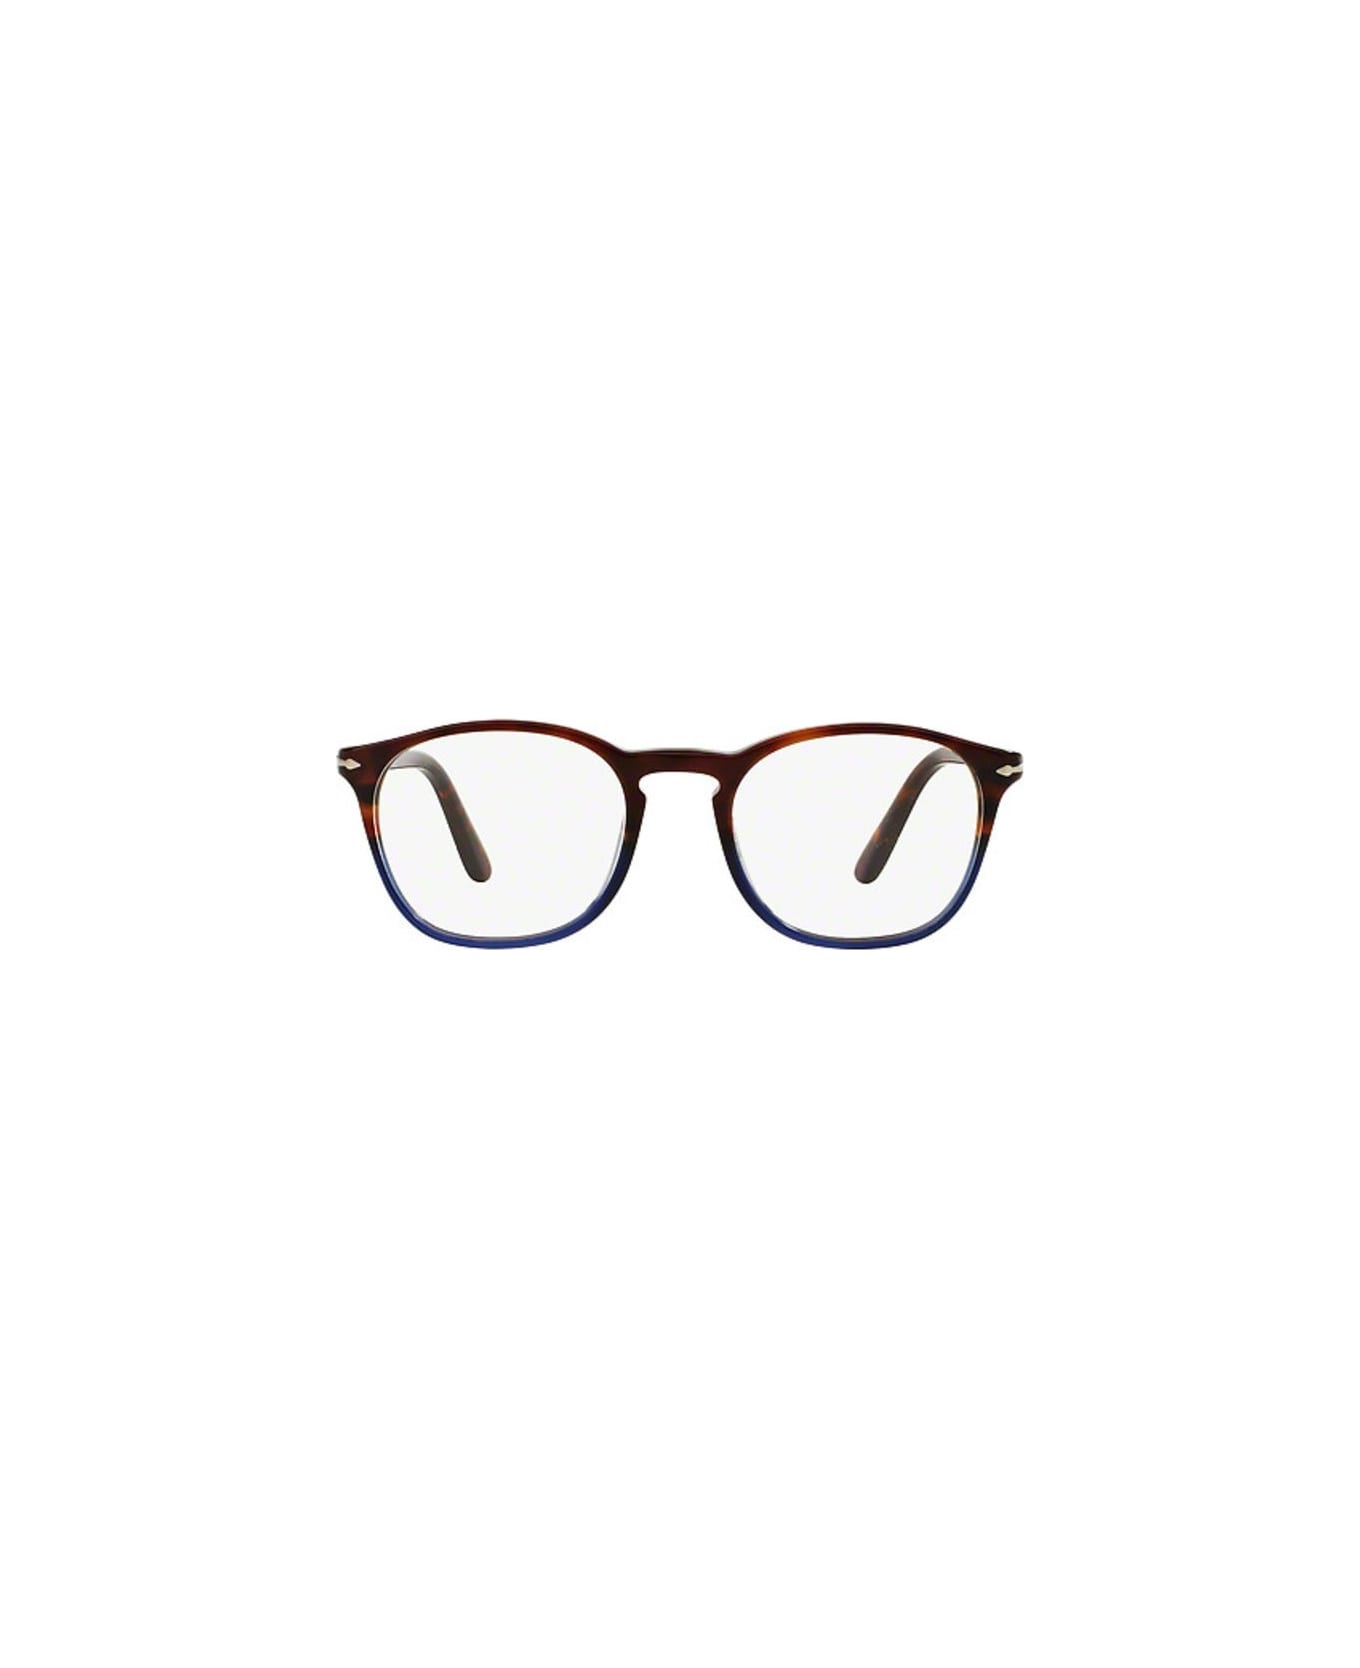 Persol Po3007v Glasses - Marrone アイウェア